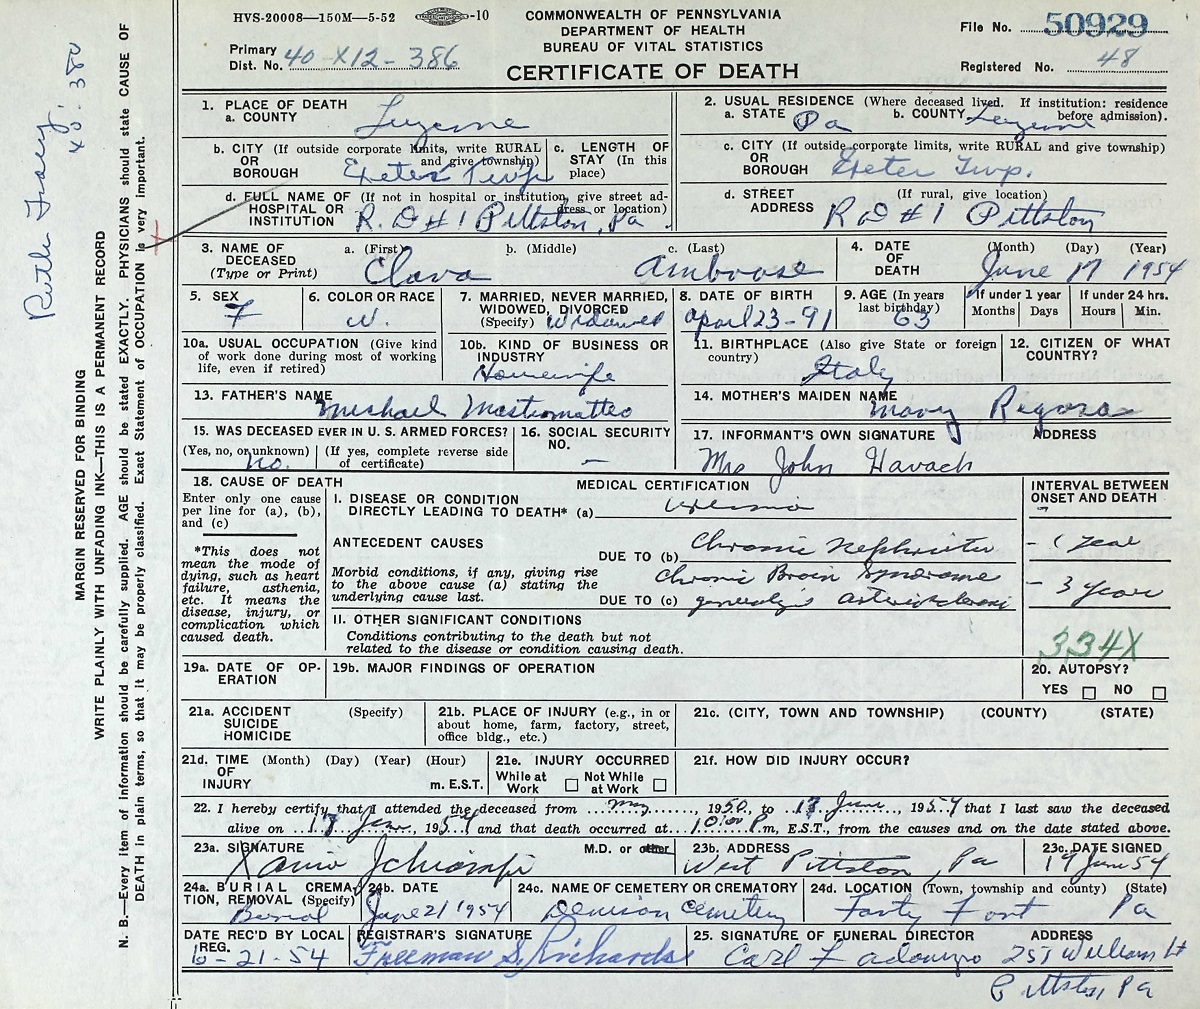 Clara Mastromatteo Abruzzese (Ambrose) Death Certificate